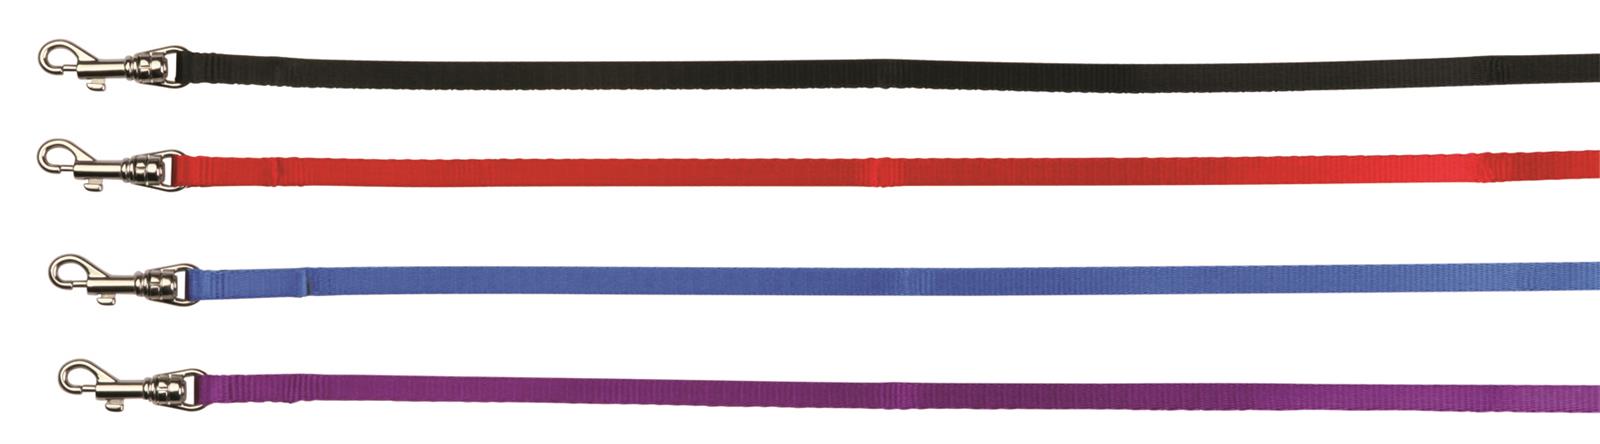 Trixie Killinge seletøj med snor, nylon, 19-31 cm/8 mm, 1,20 m